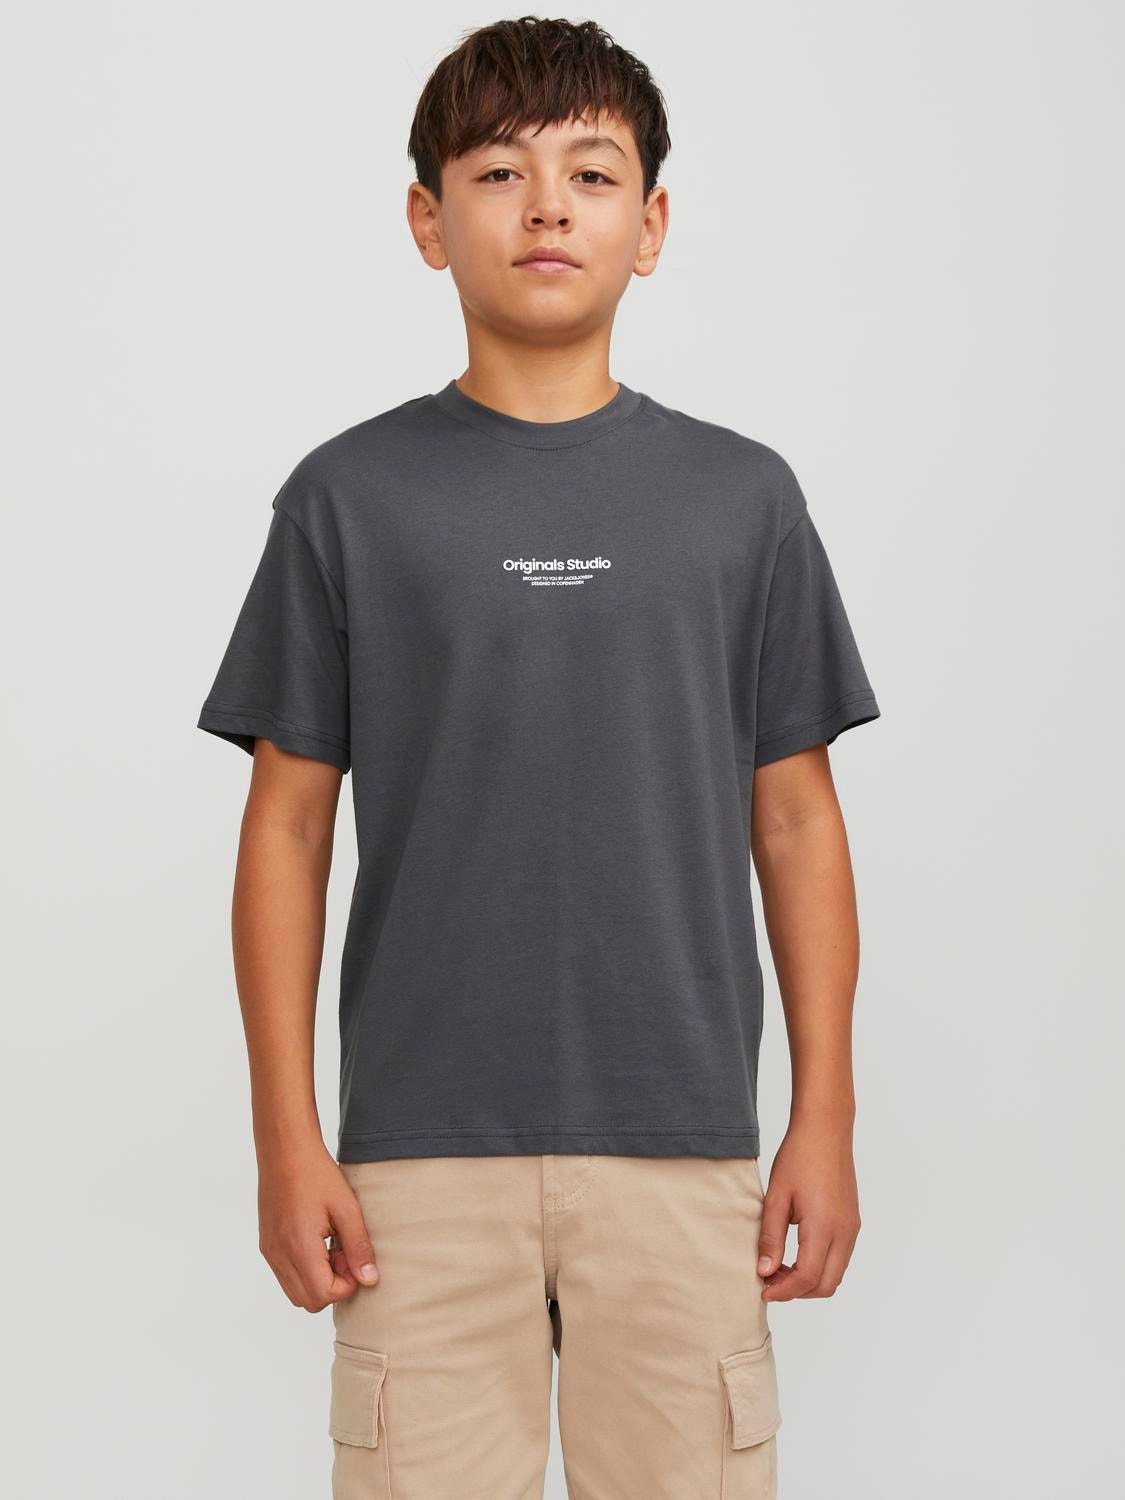 Jack & Jones Printed T-shirt For boys -Asphalt - 12242827